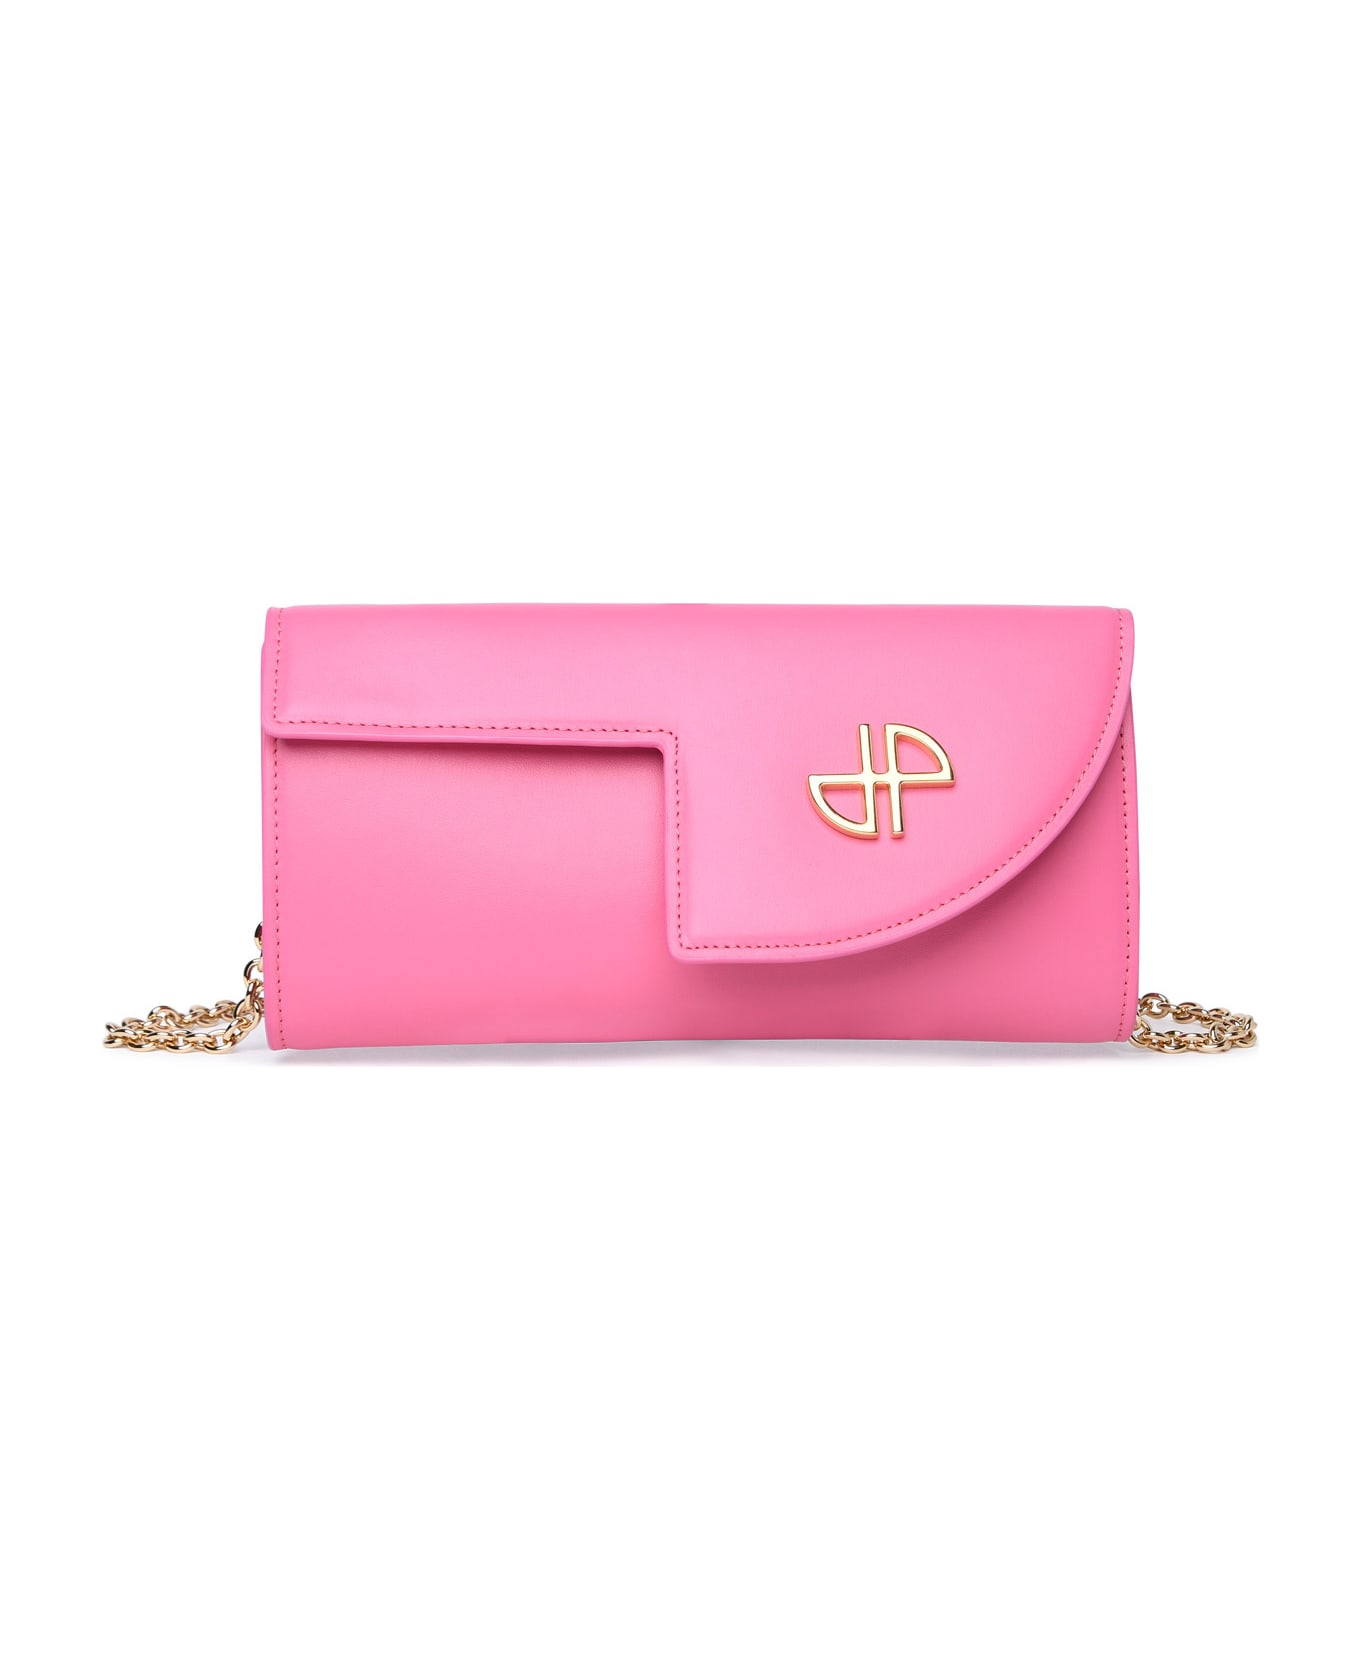 Patou 'jp' Pink Leather Crossbody Bag - Pink ショルダーバッグ